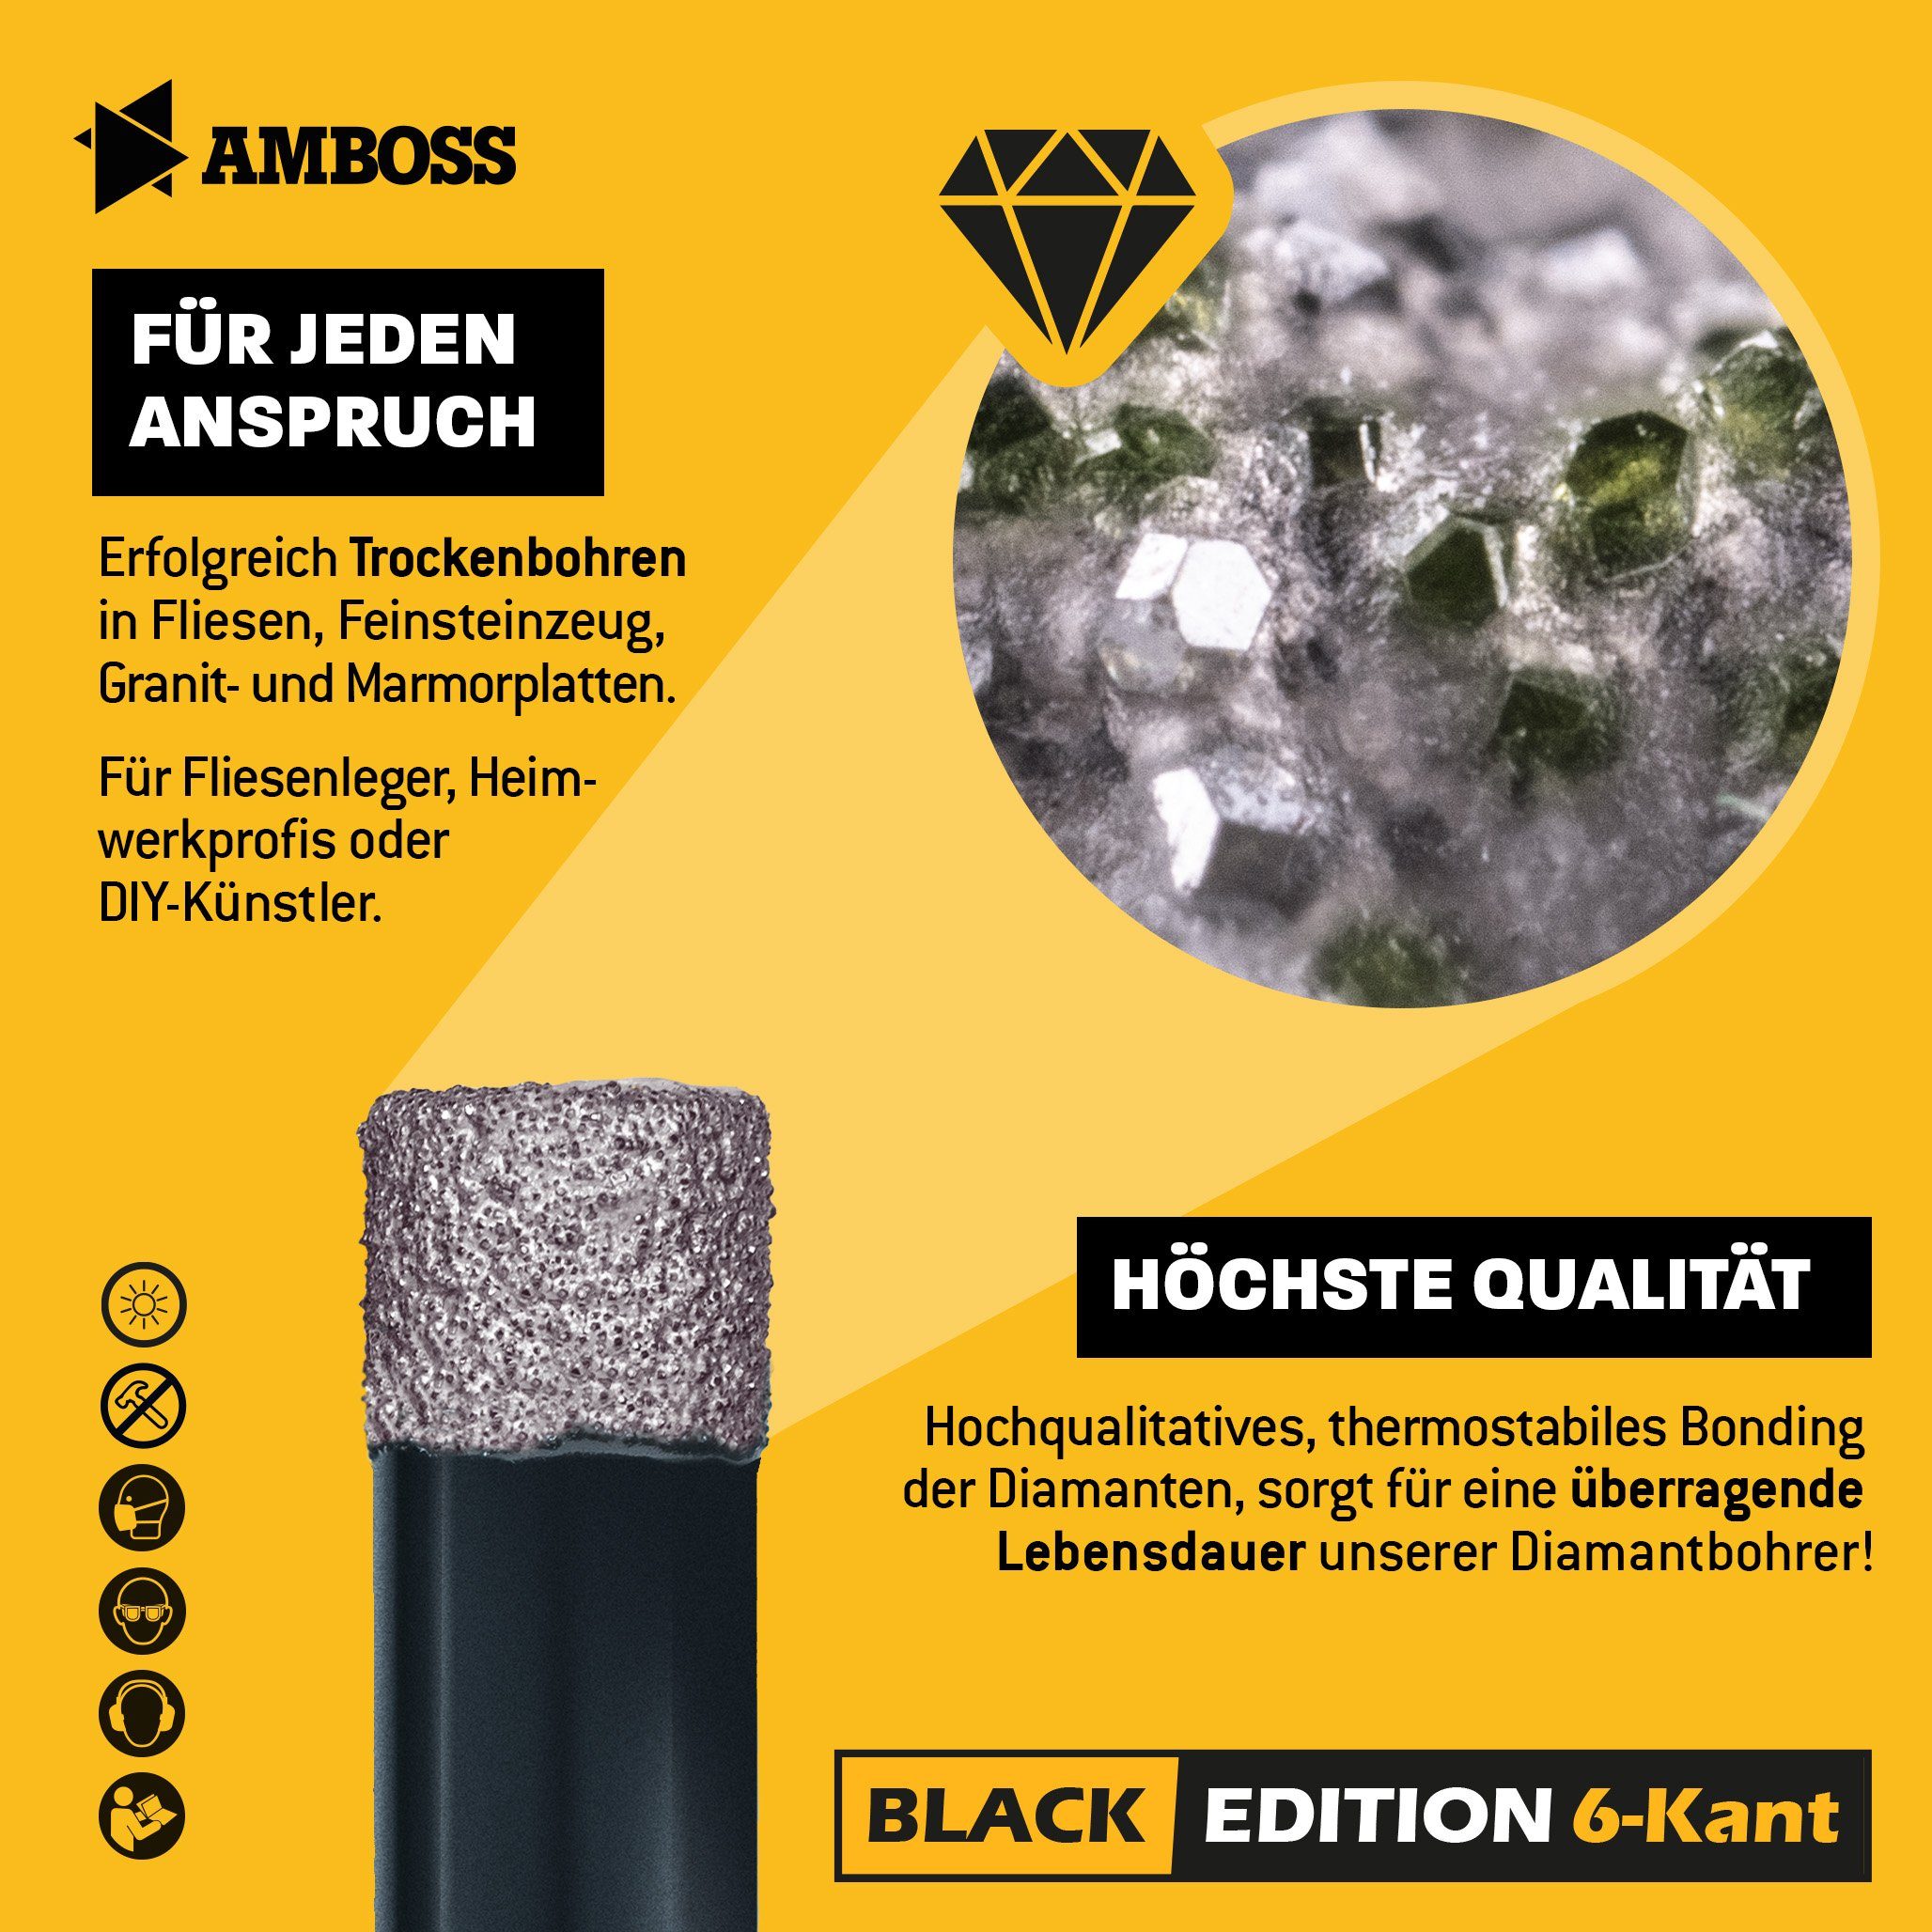 Amboss 12 Edition Werkzeuge Lochsäge Diamant Amboss mm, mm 12 Bohrer Ø Black